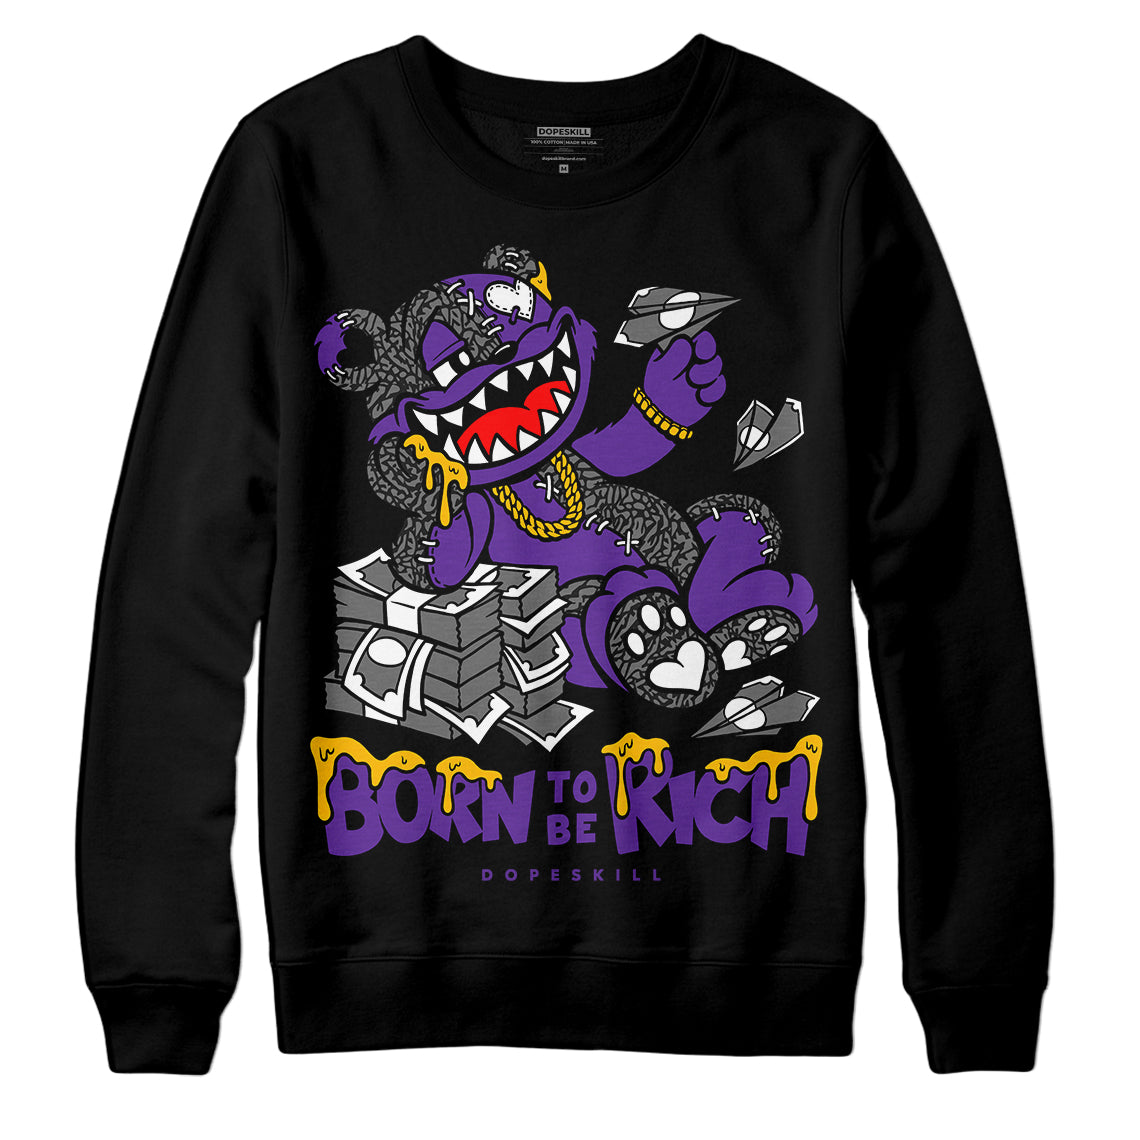 Jordan 3 Dark Iris DopeSkill Sweatshirt Born To Be Rich Graphic Streetwear - Black